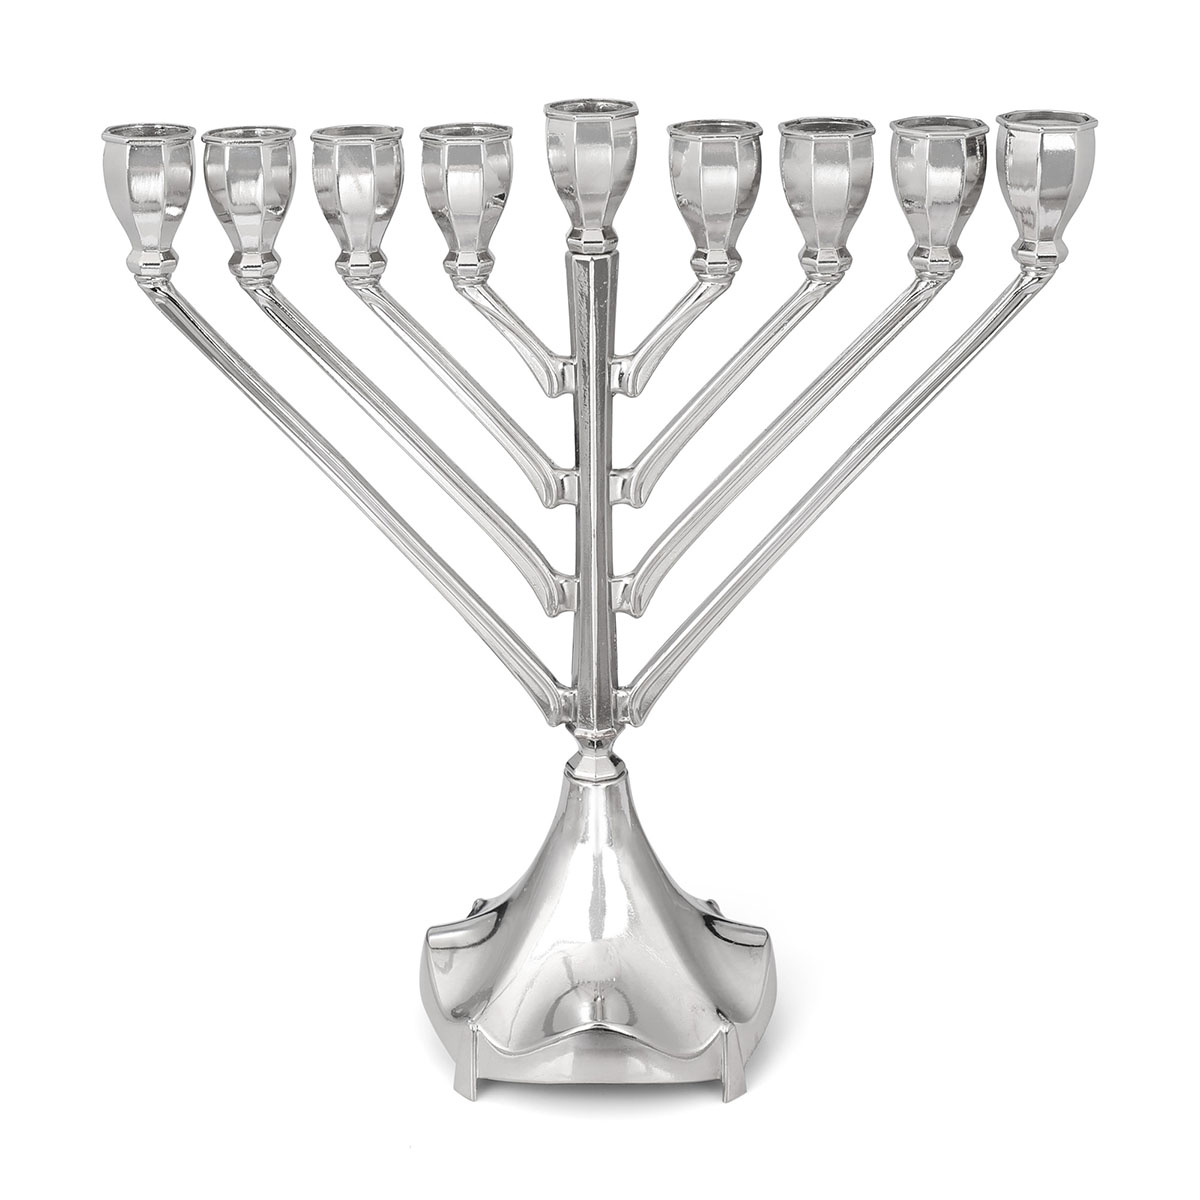 Nickel Plated Straight Branched Chabad-Style Hanukkah Menorah - 1